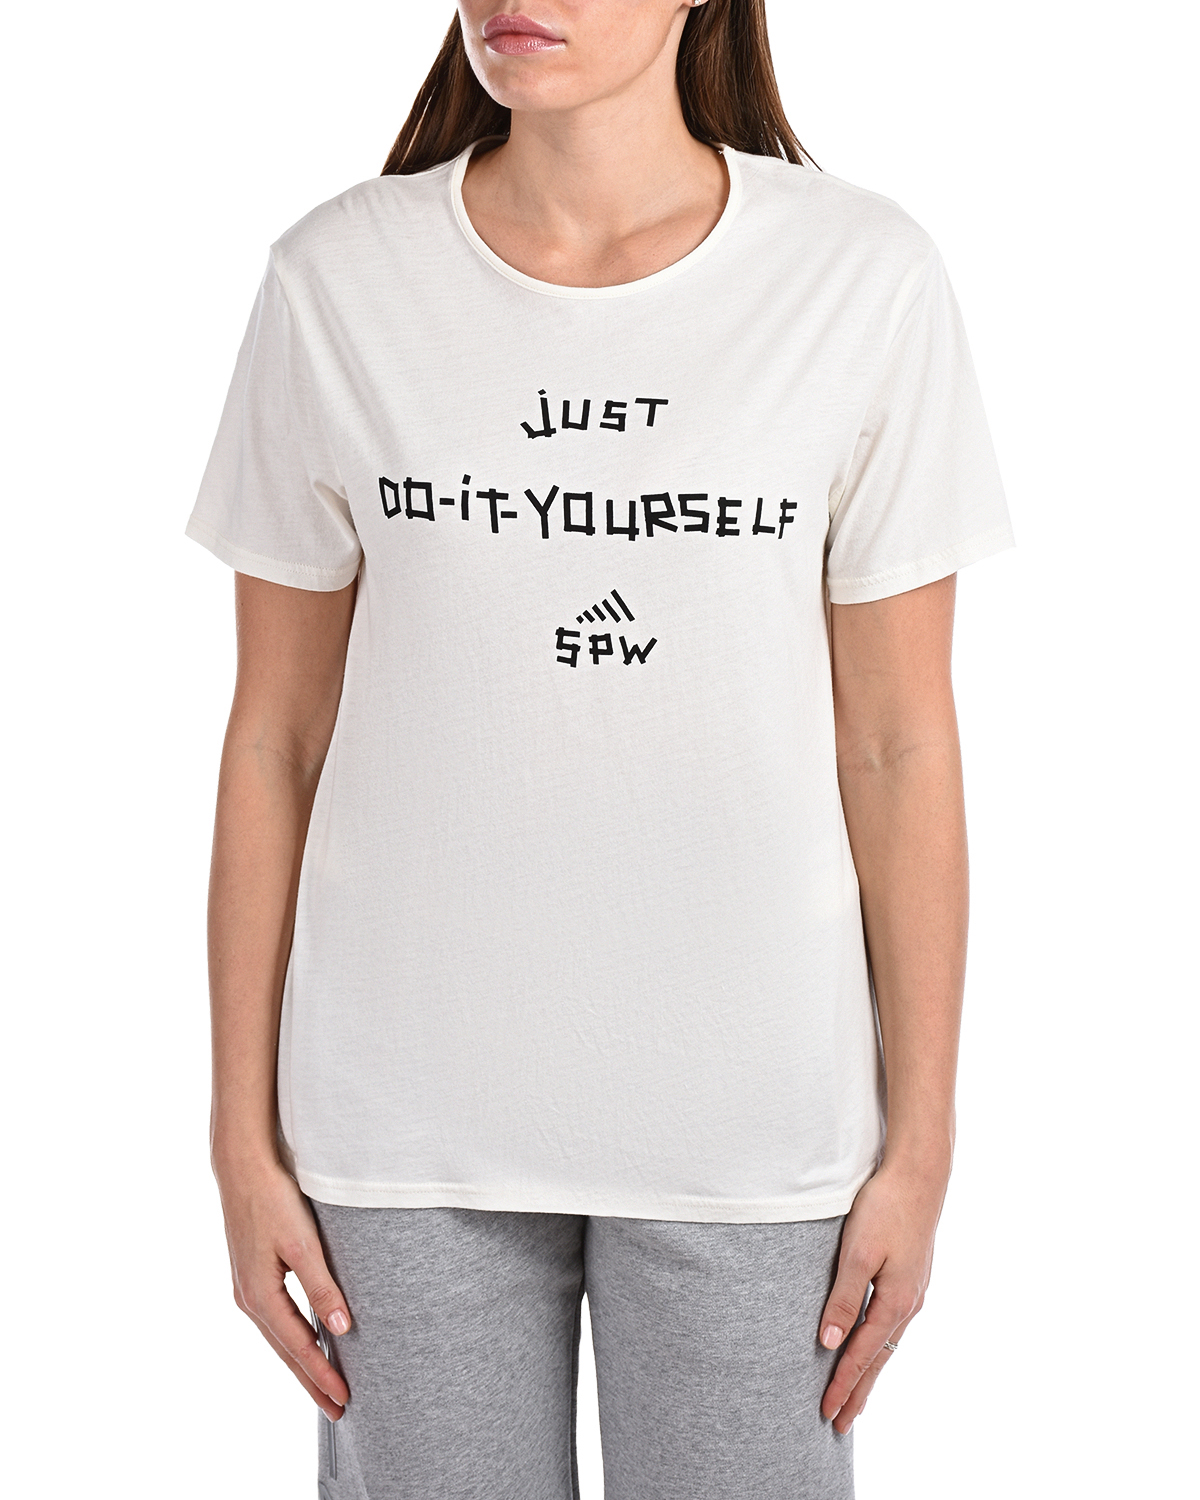 Белая футболка с принтом "just do it yourself" 5 Preview - фото 7